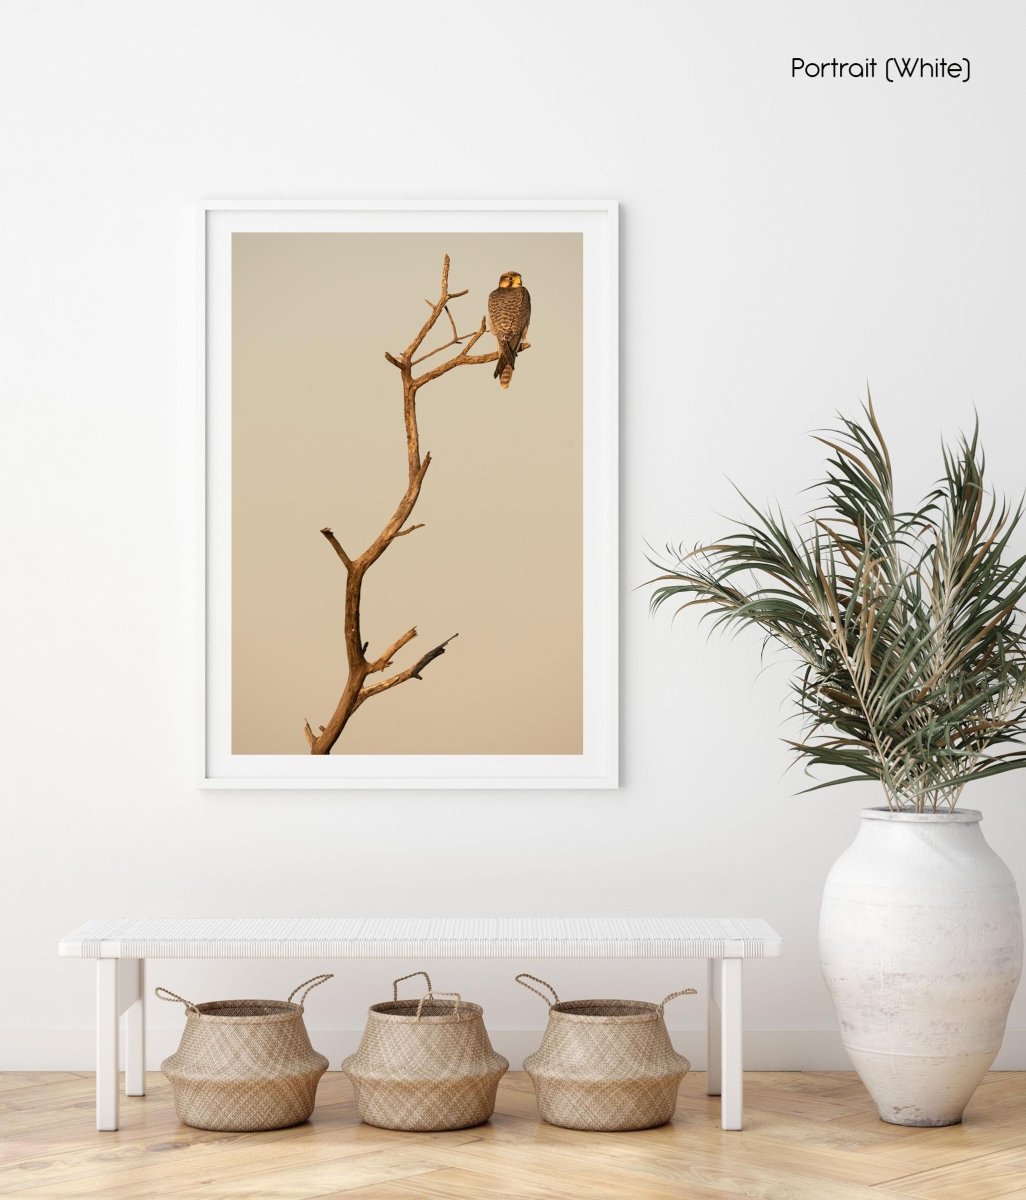 Bird standing on top of branch